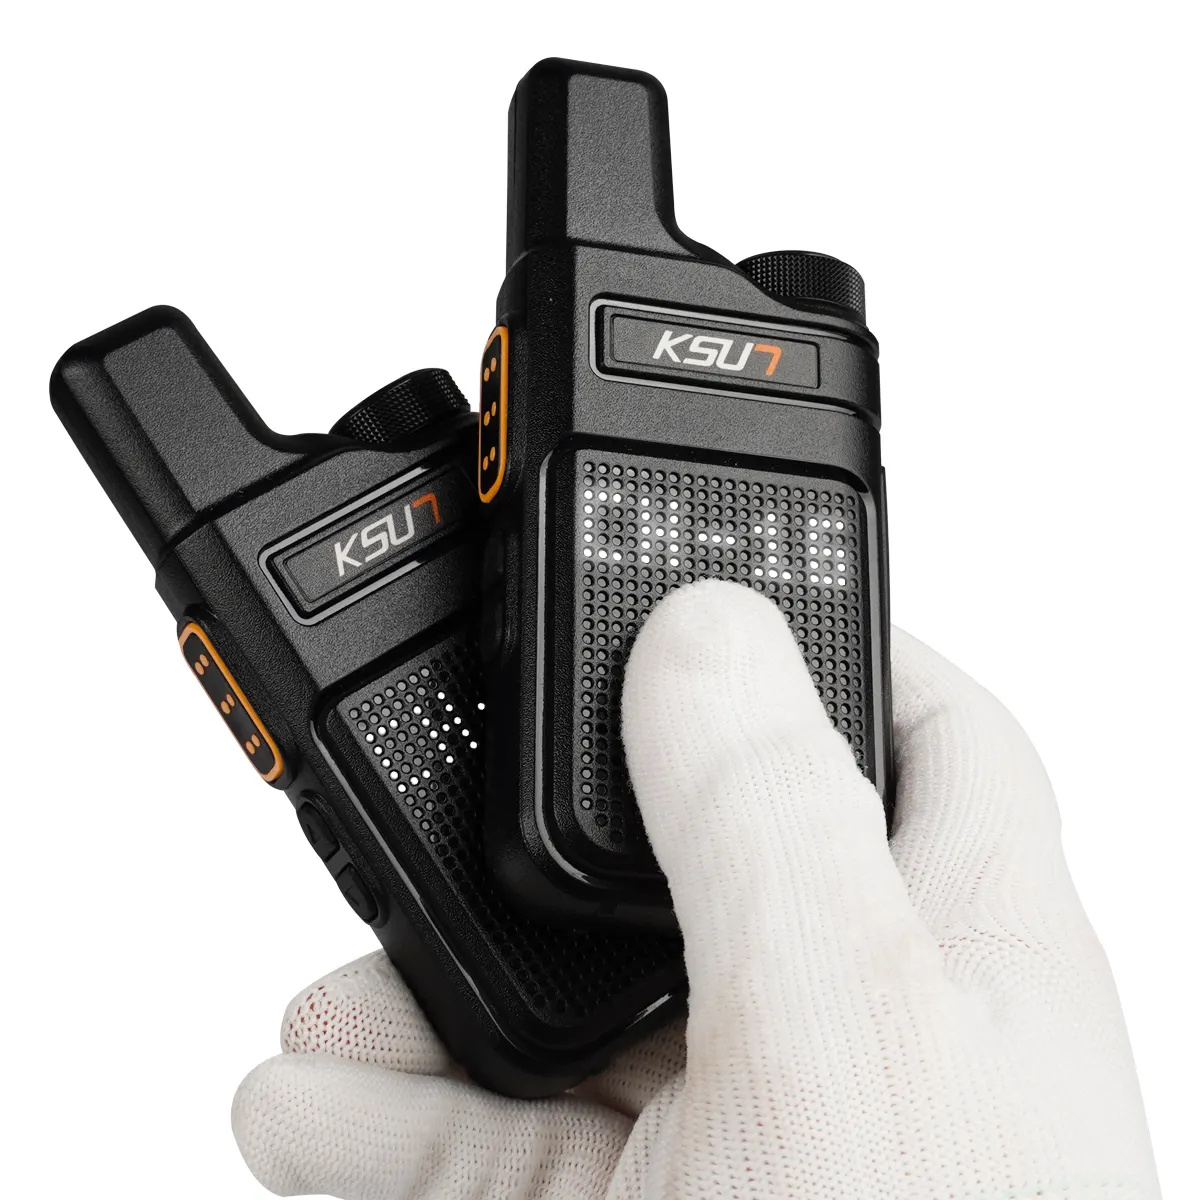 PMR 446 Walkie Talkie Mini comunicazioni portatili Radio Pro Walkie Talkie ricetrasmettitore radio bidirezionale qualità KSUT M6